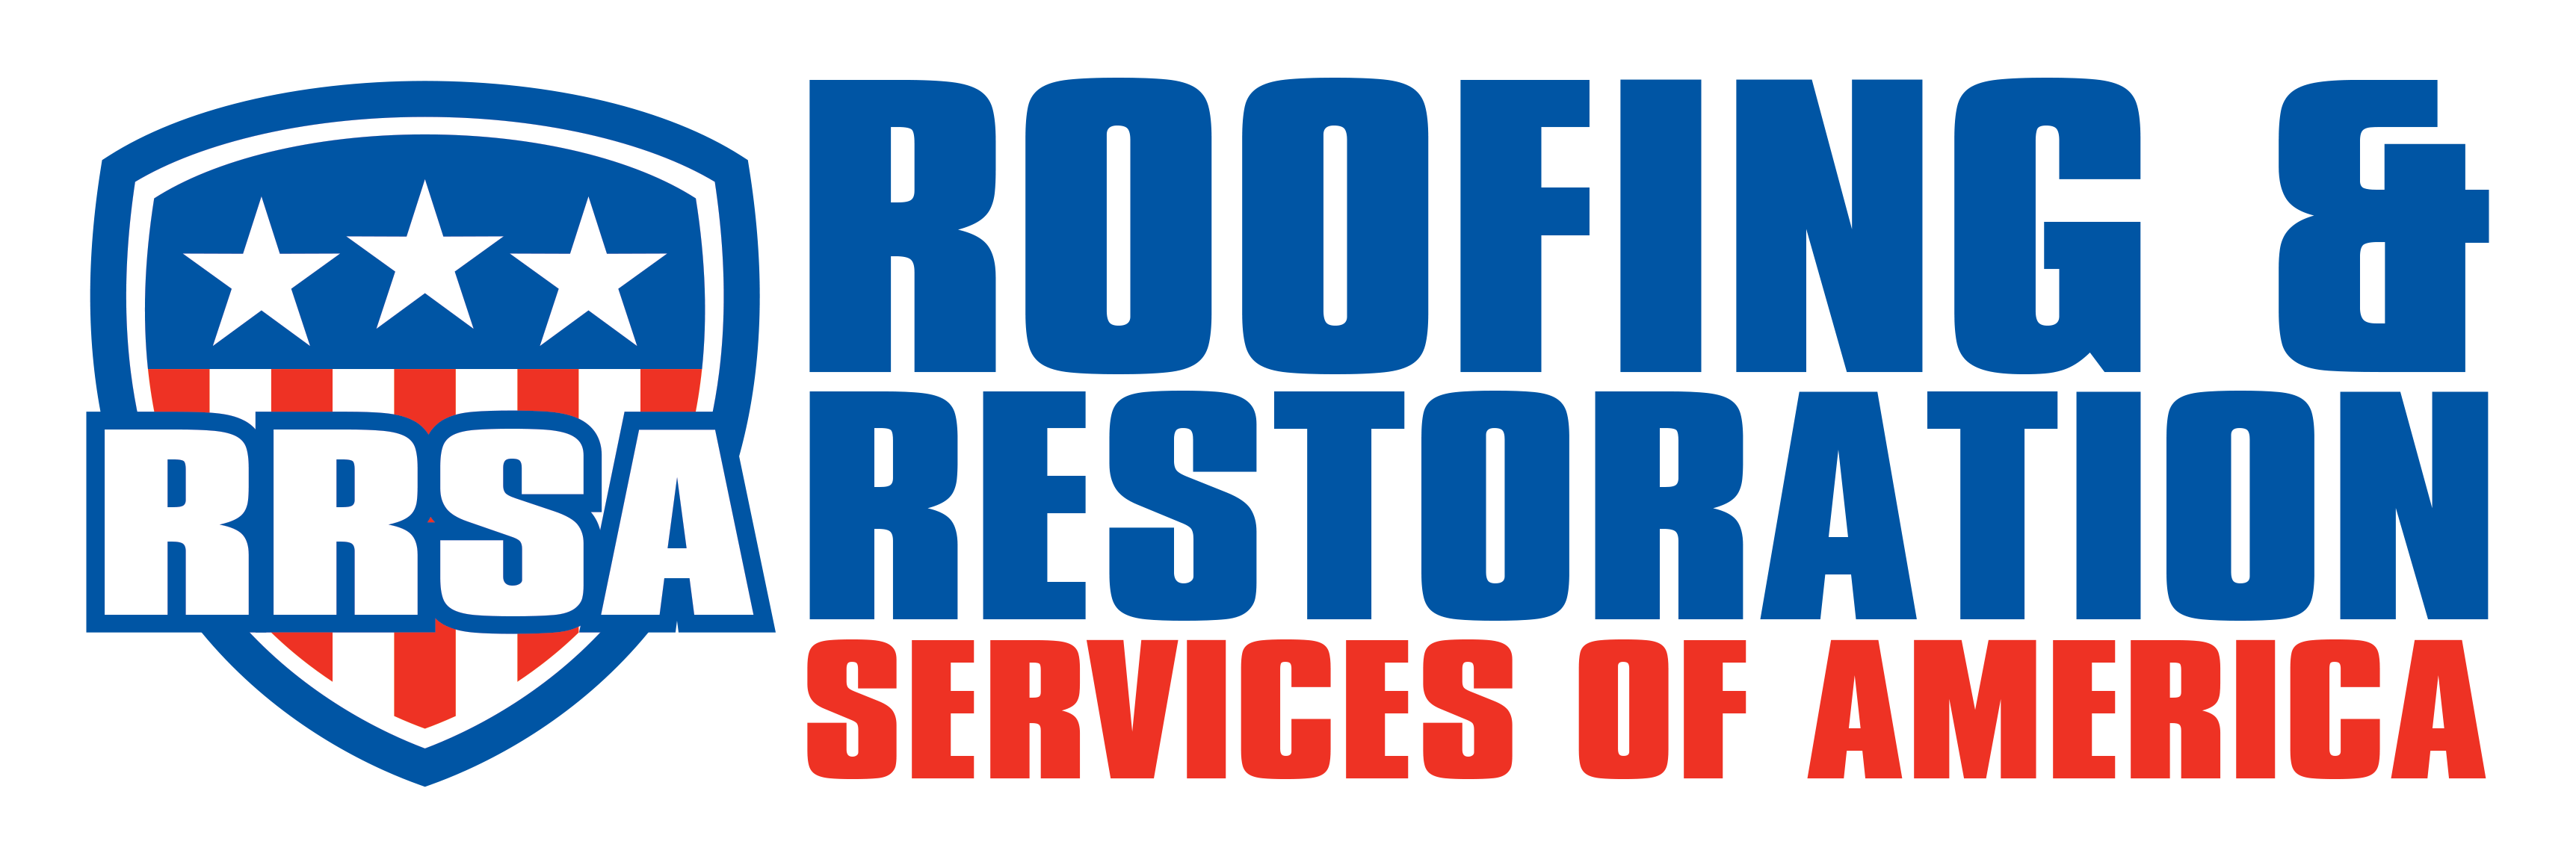 Roofing & Restoration Services of America, LLC Logo